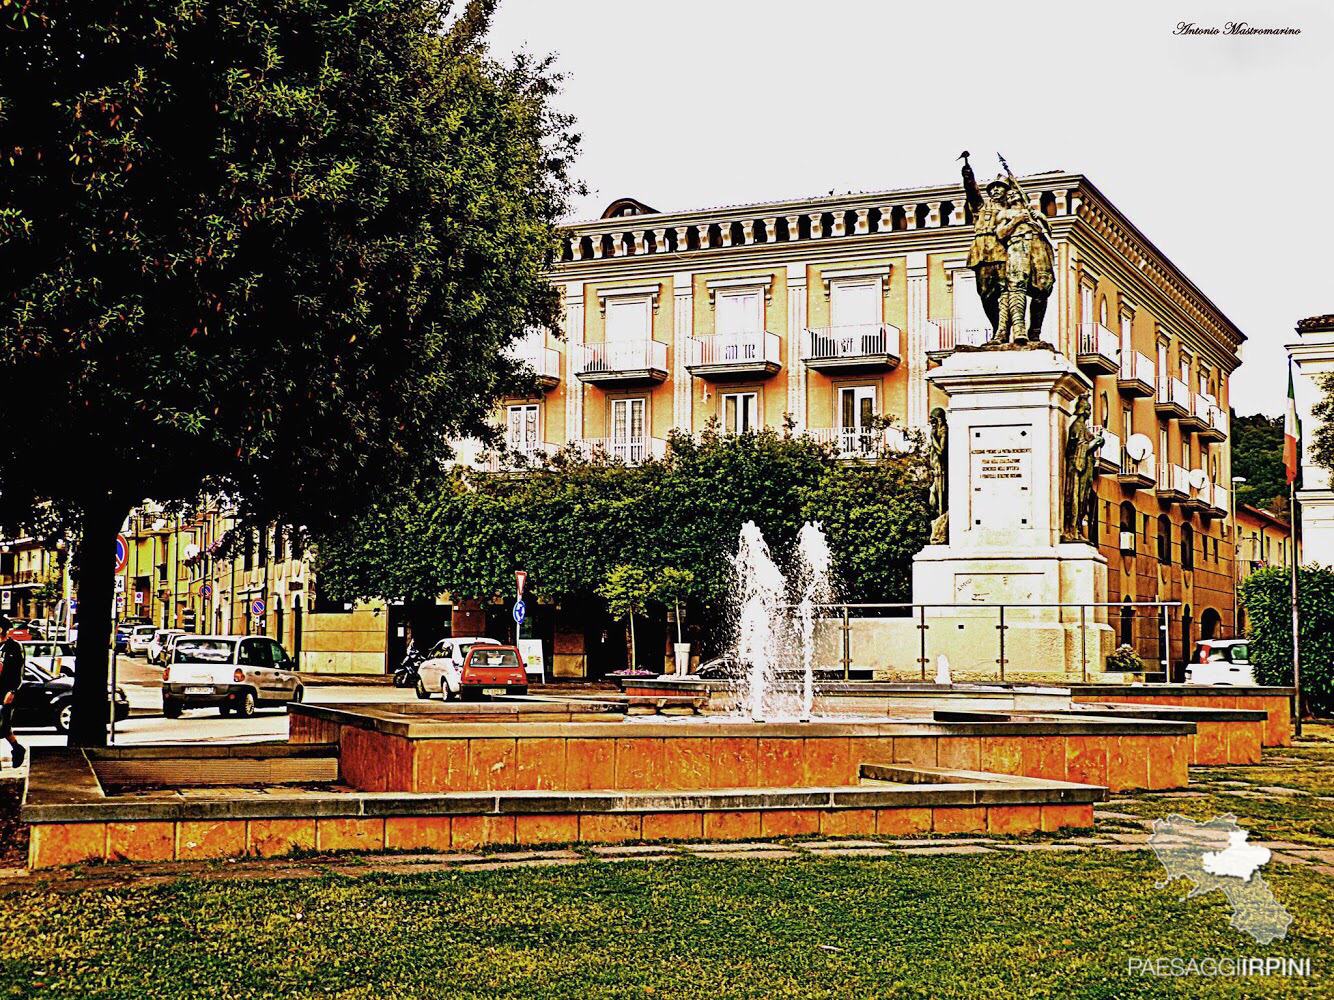 Atripalda - Piazza Umberto I